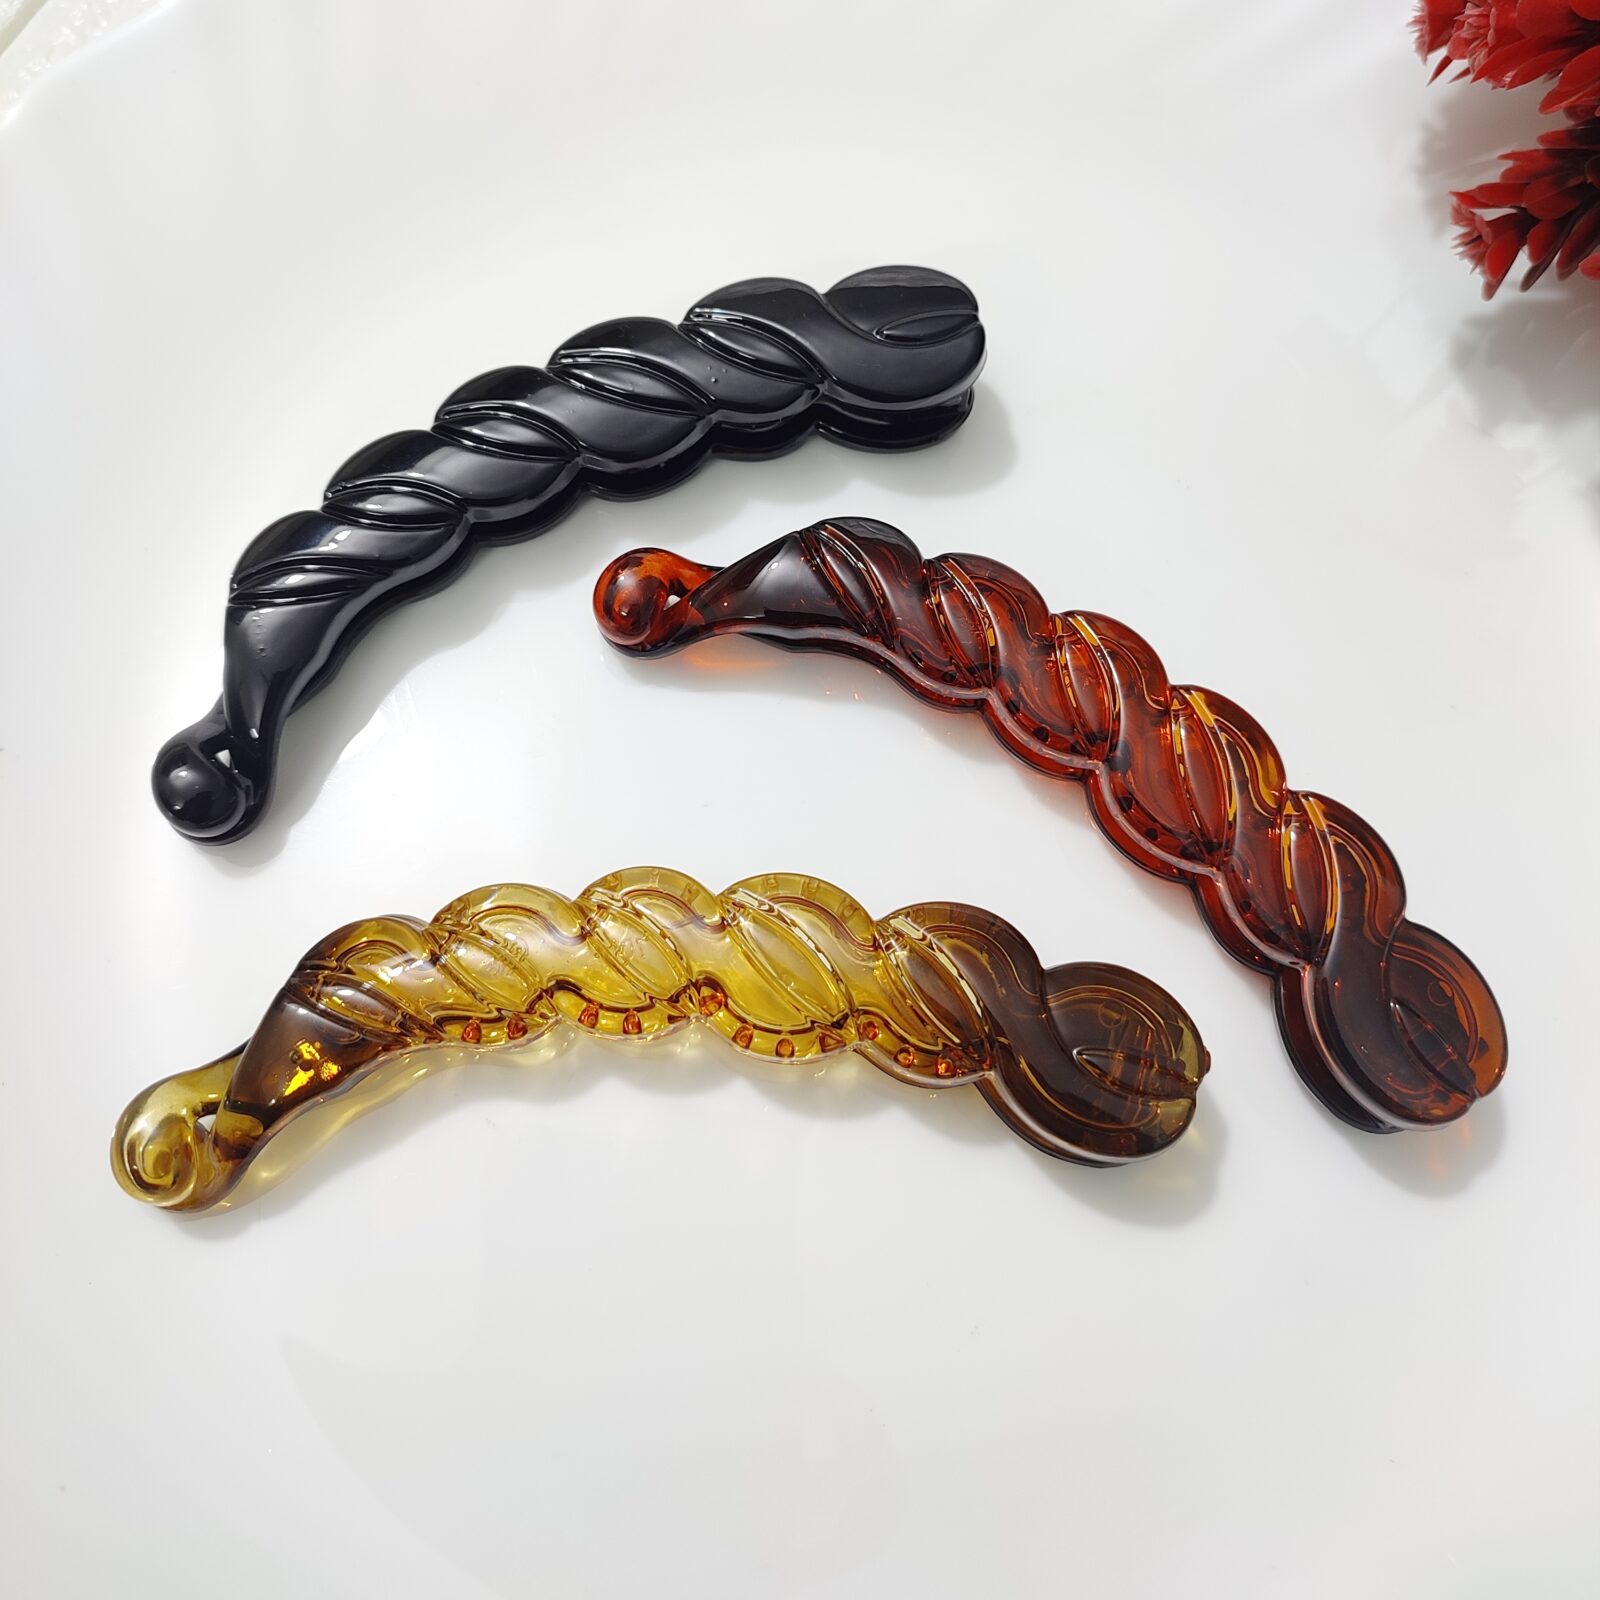 Amazon.com : Plastic Medium Size Banana Hair Clutcher Clip for Women Black,  Golden & Silver : Beauty & Personal Care